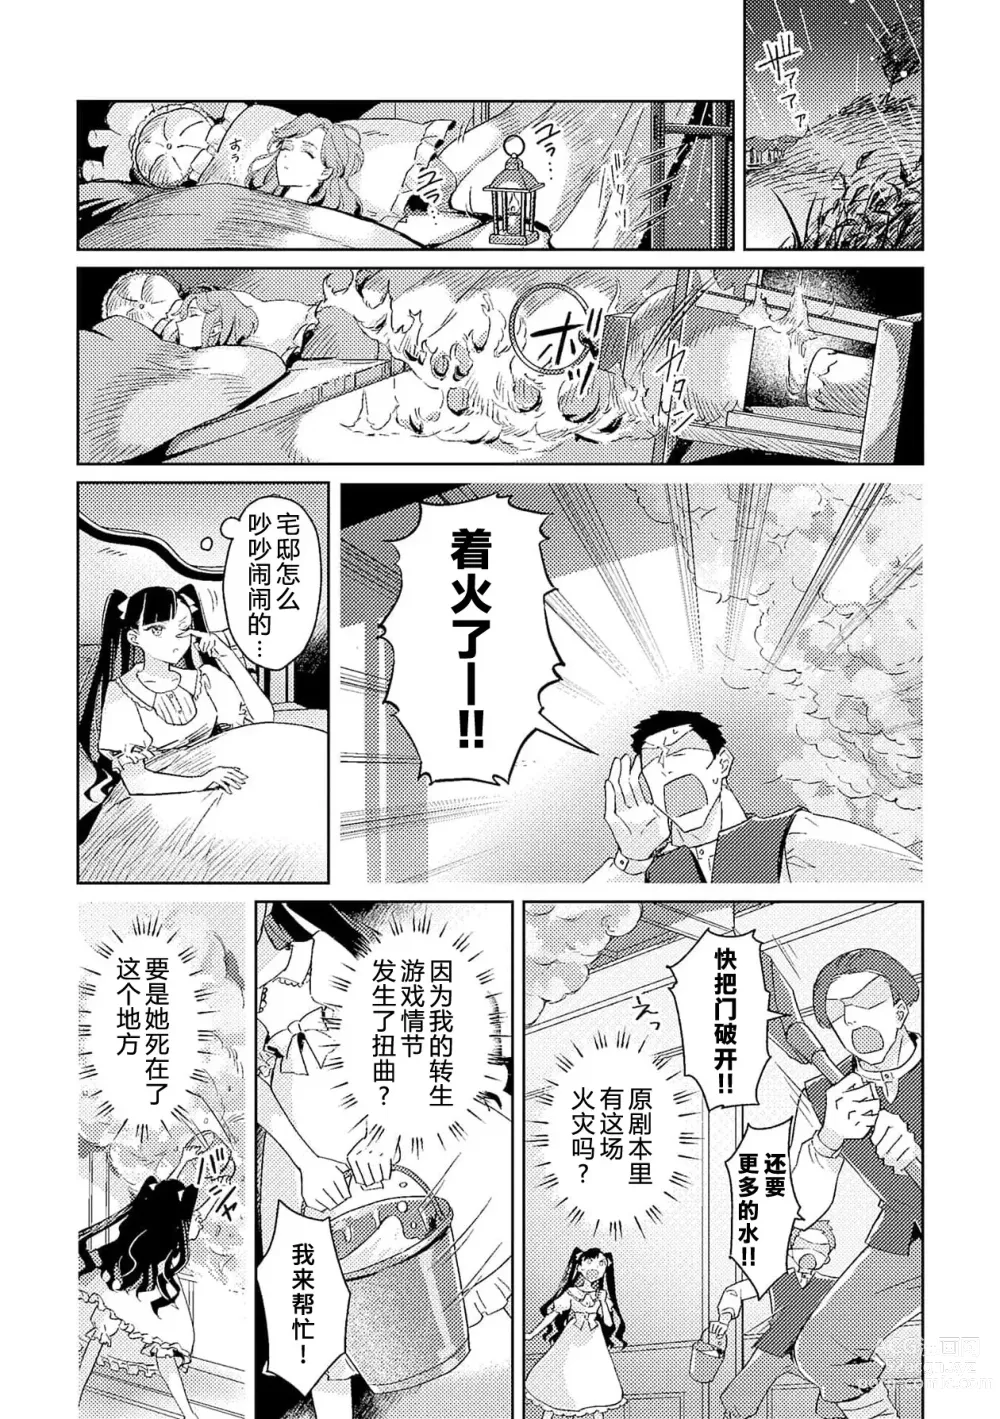 Page 10 of manga 身为恶役千金，堕落于魔界王子身下这条路线真的可以有？ 1-7